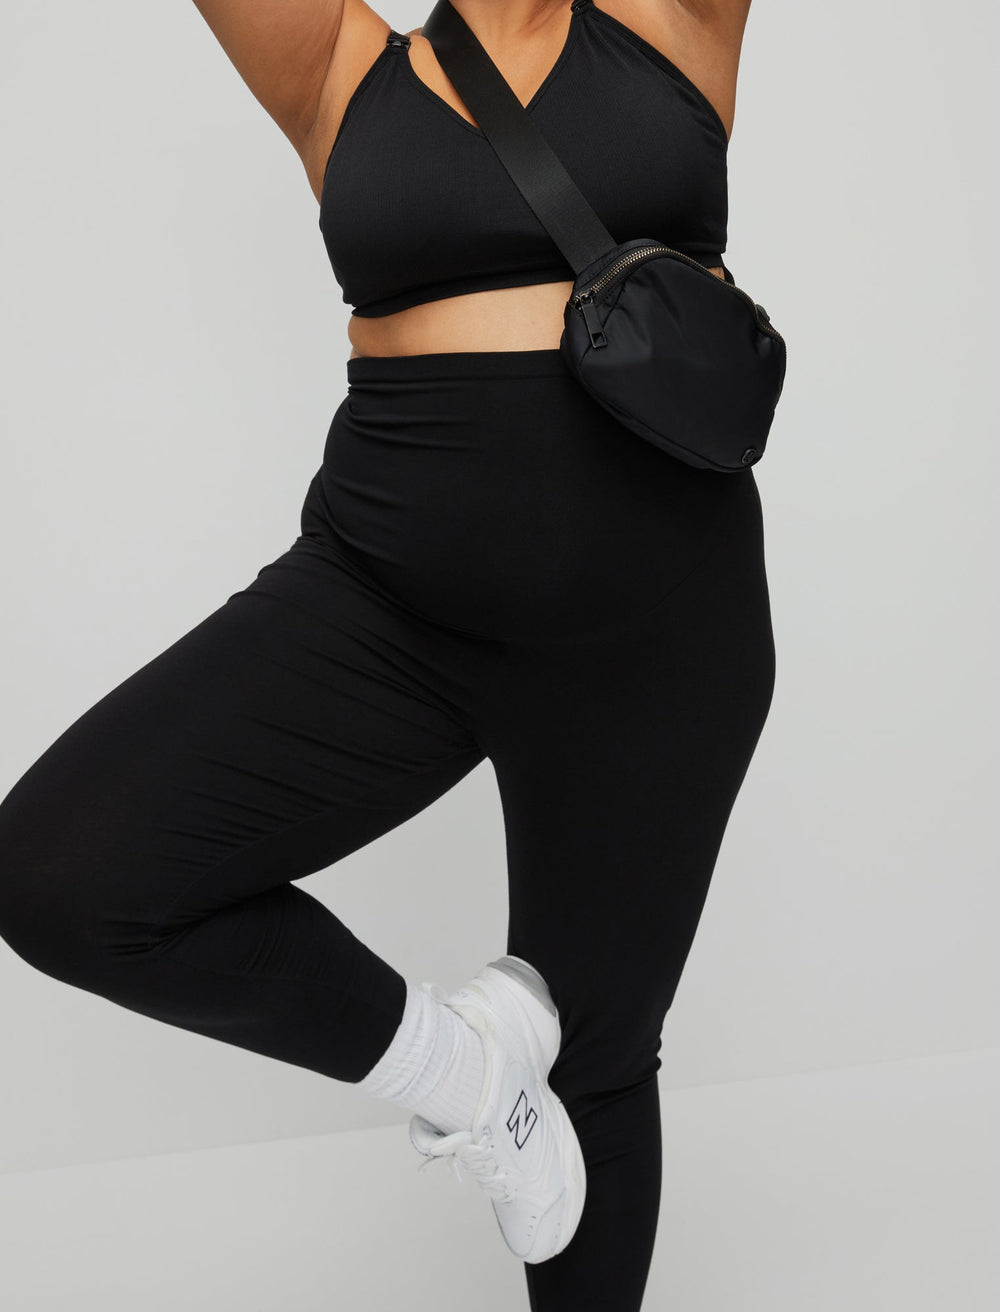 Women's Plus Size Solid Black Nylon Seamless Capri Leggings